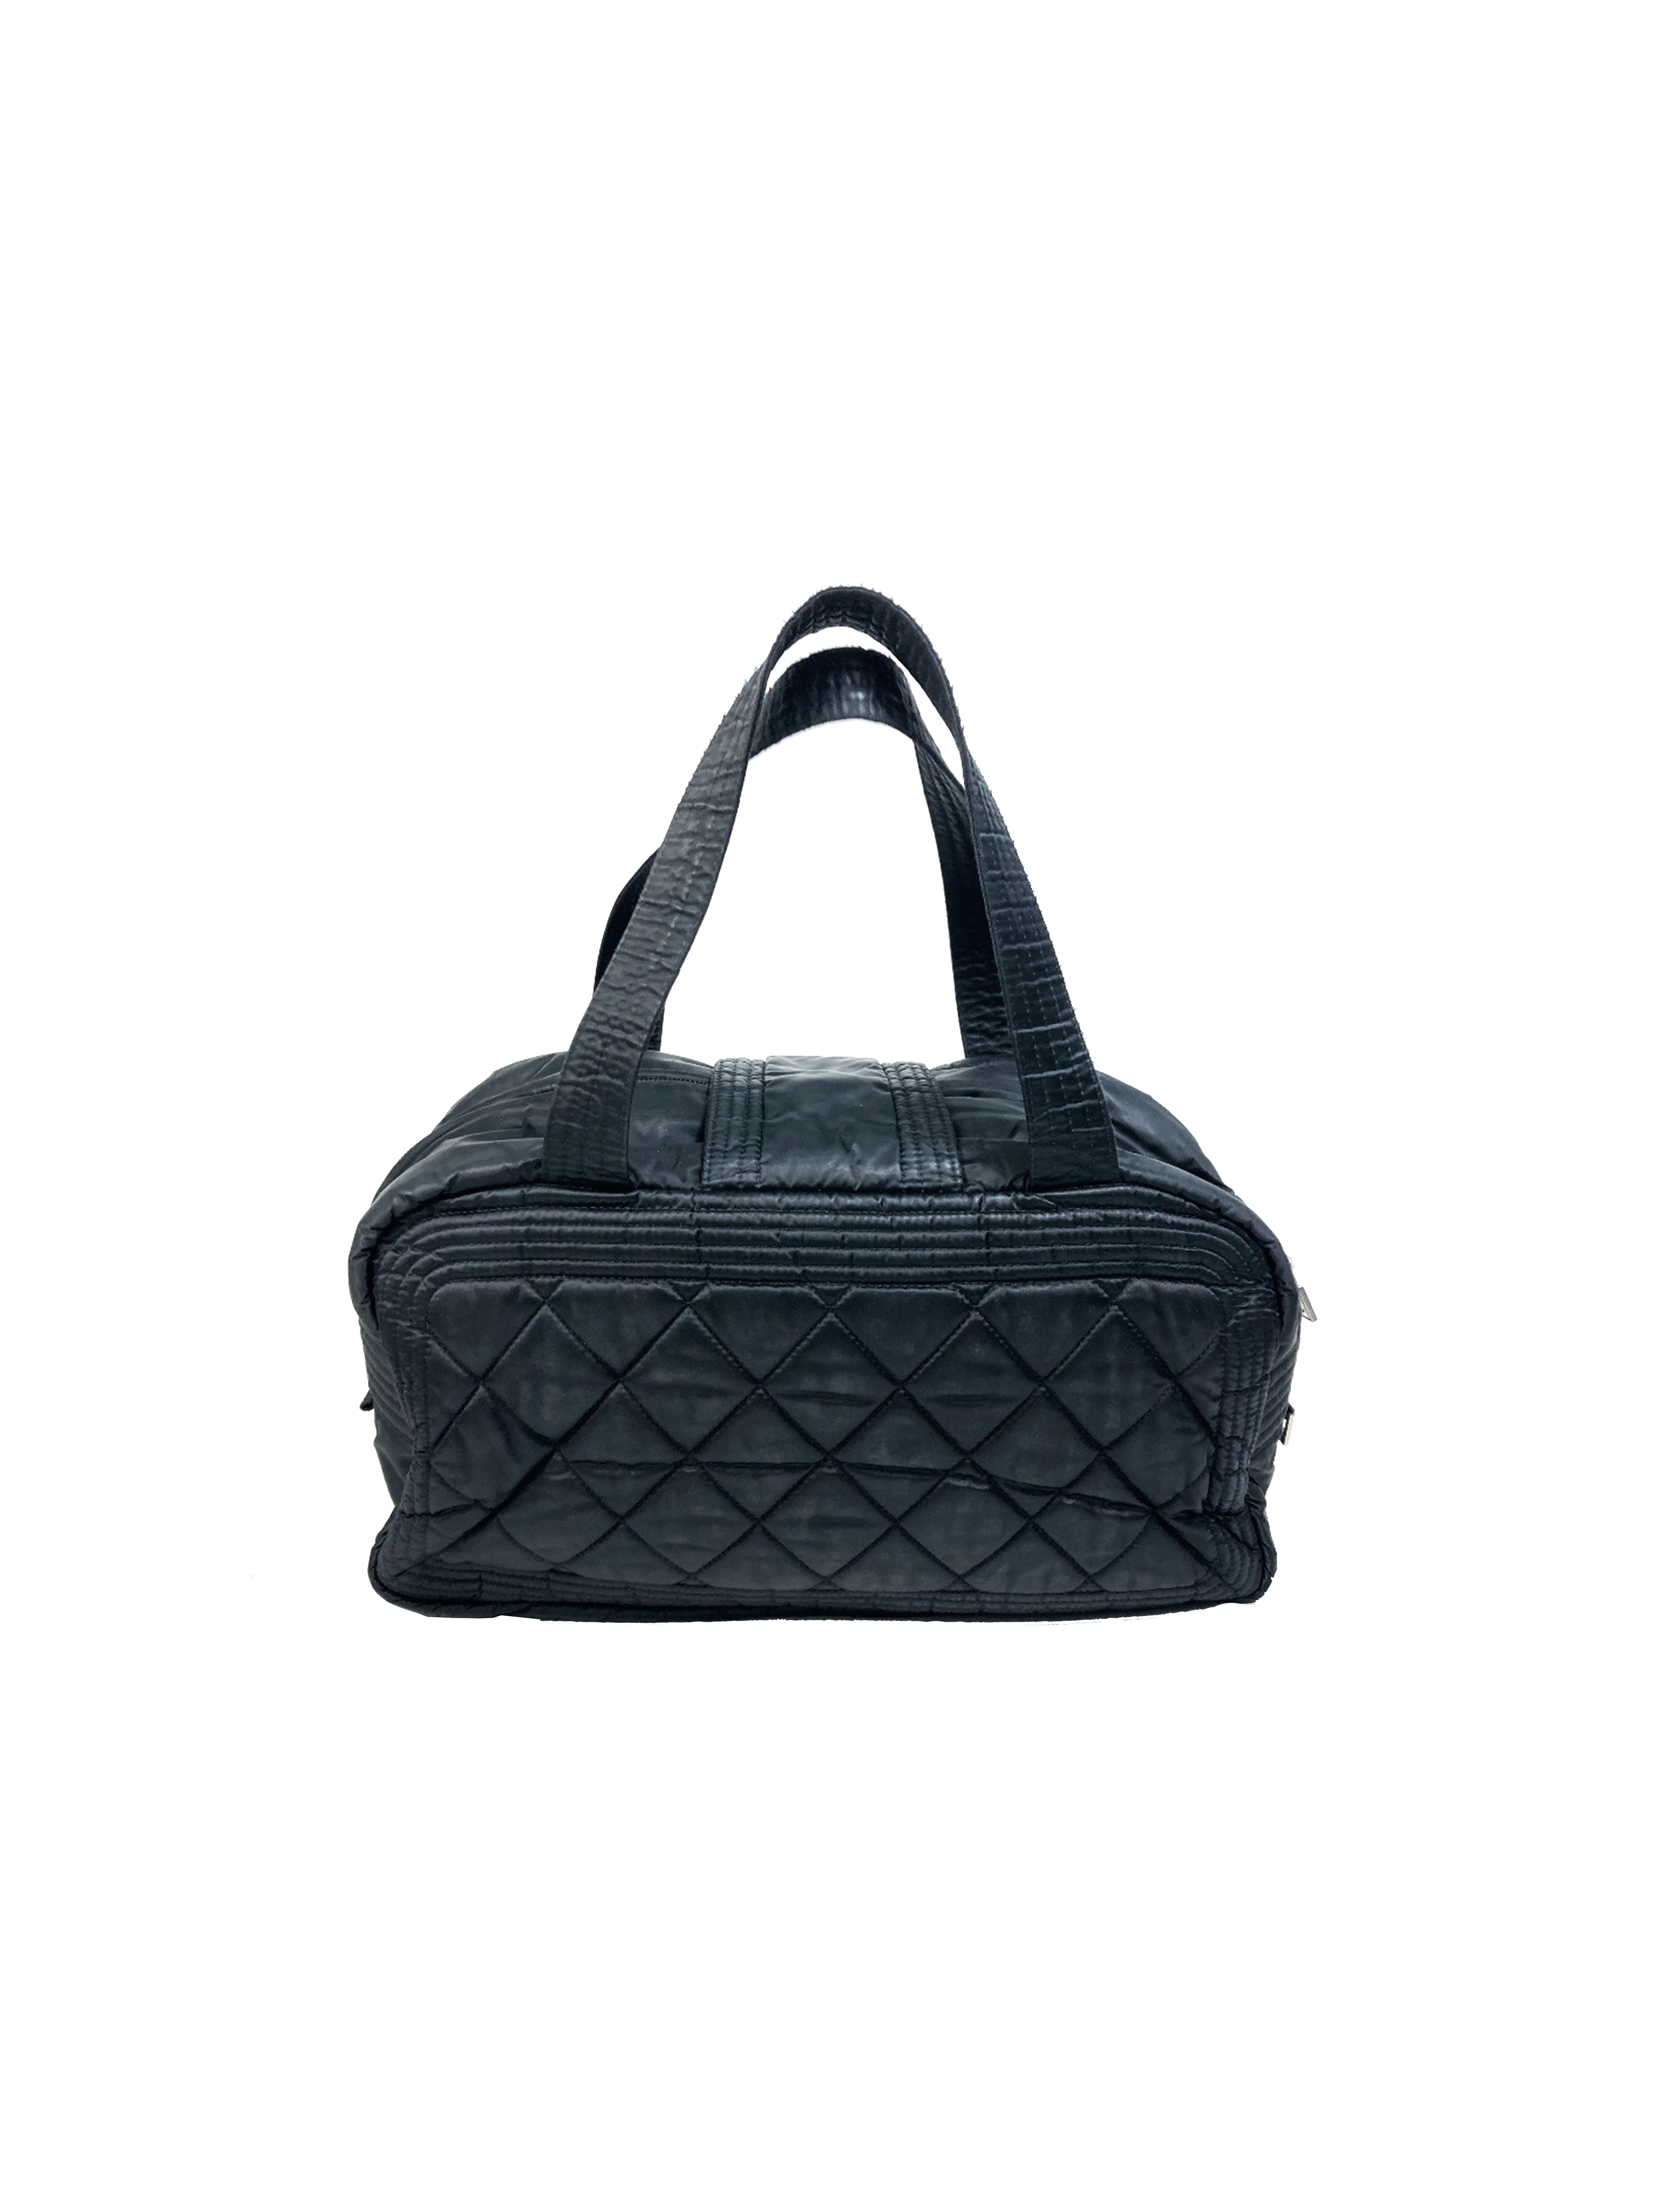 Chanel 2005 Sports Black Nylon Tote Bag